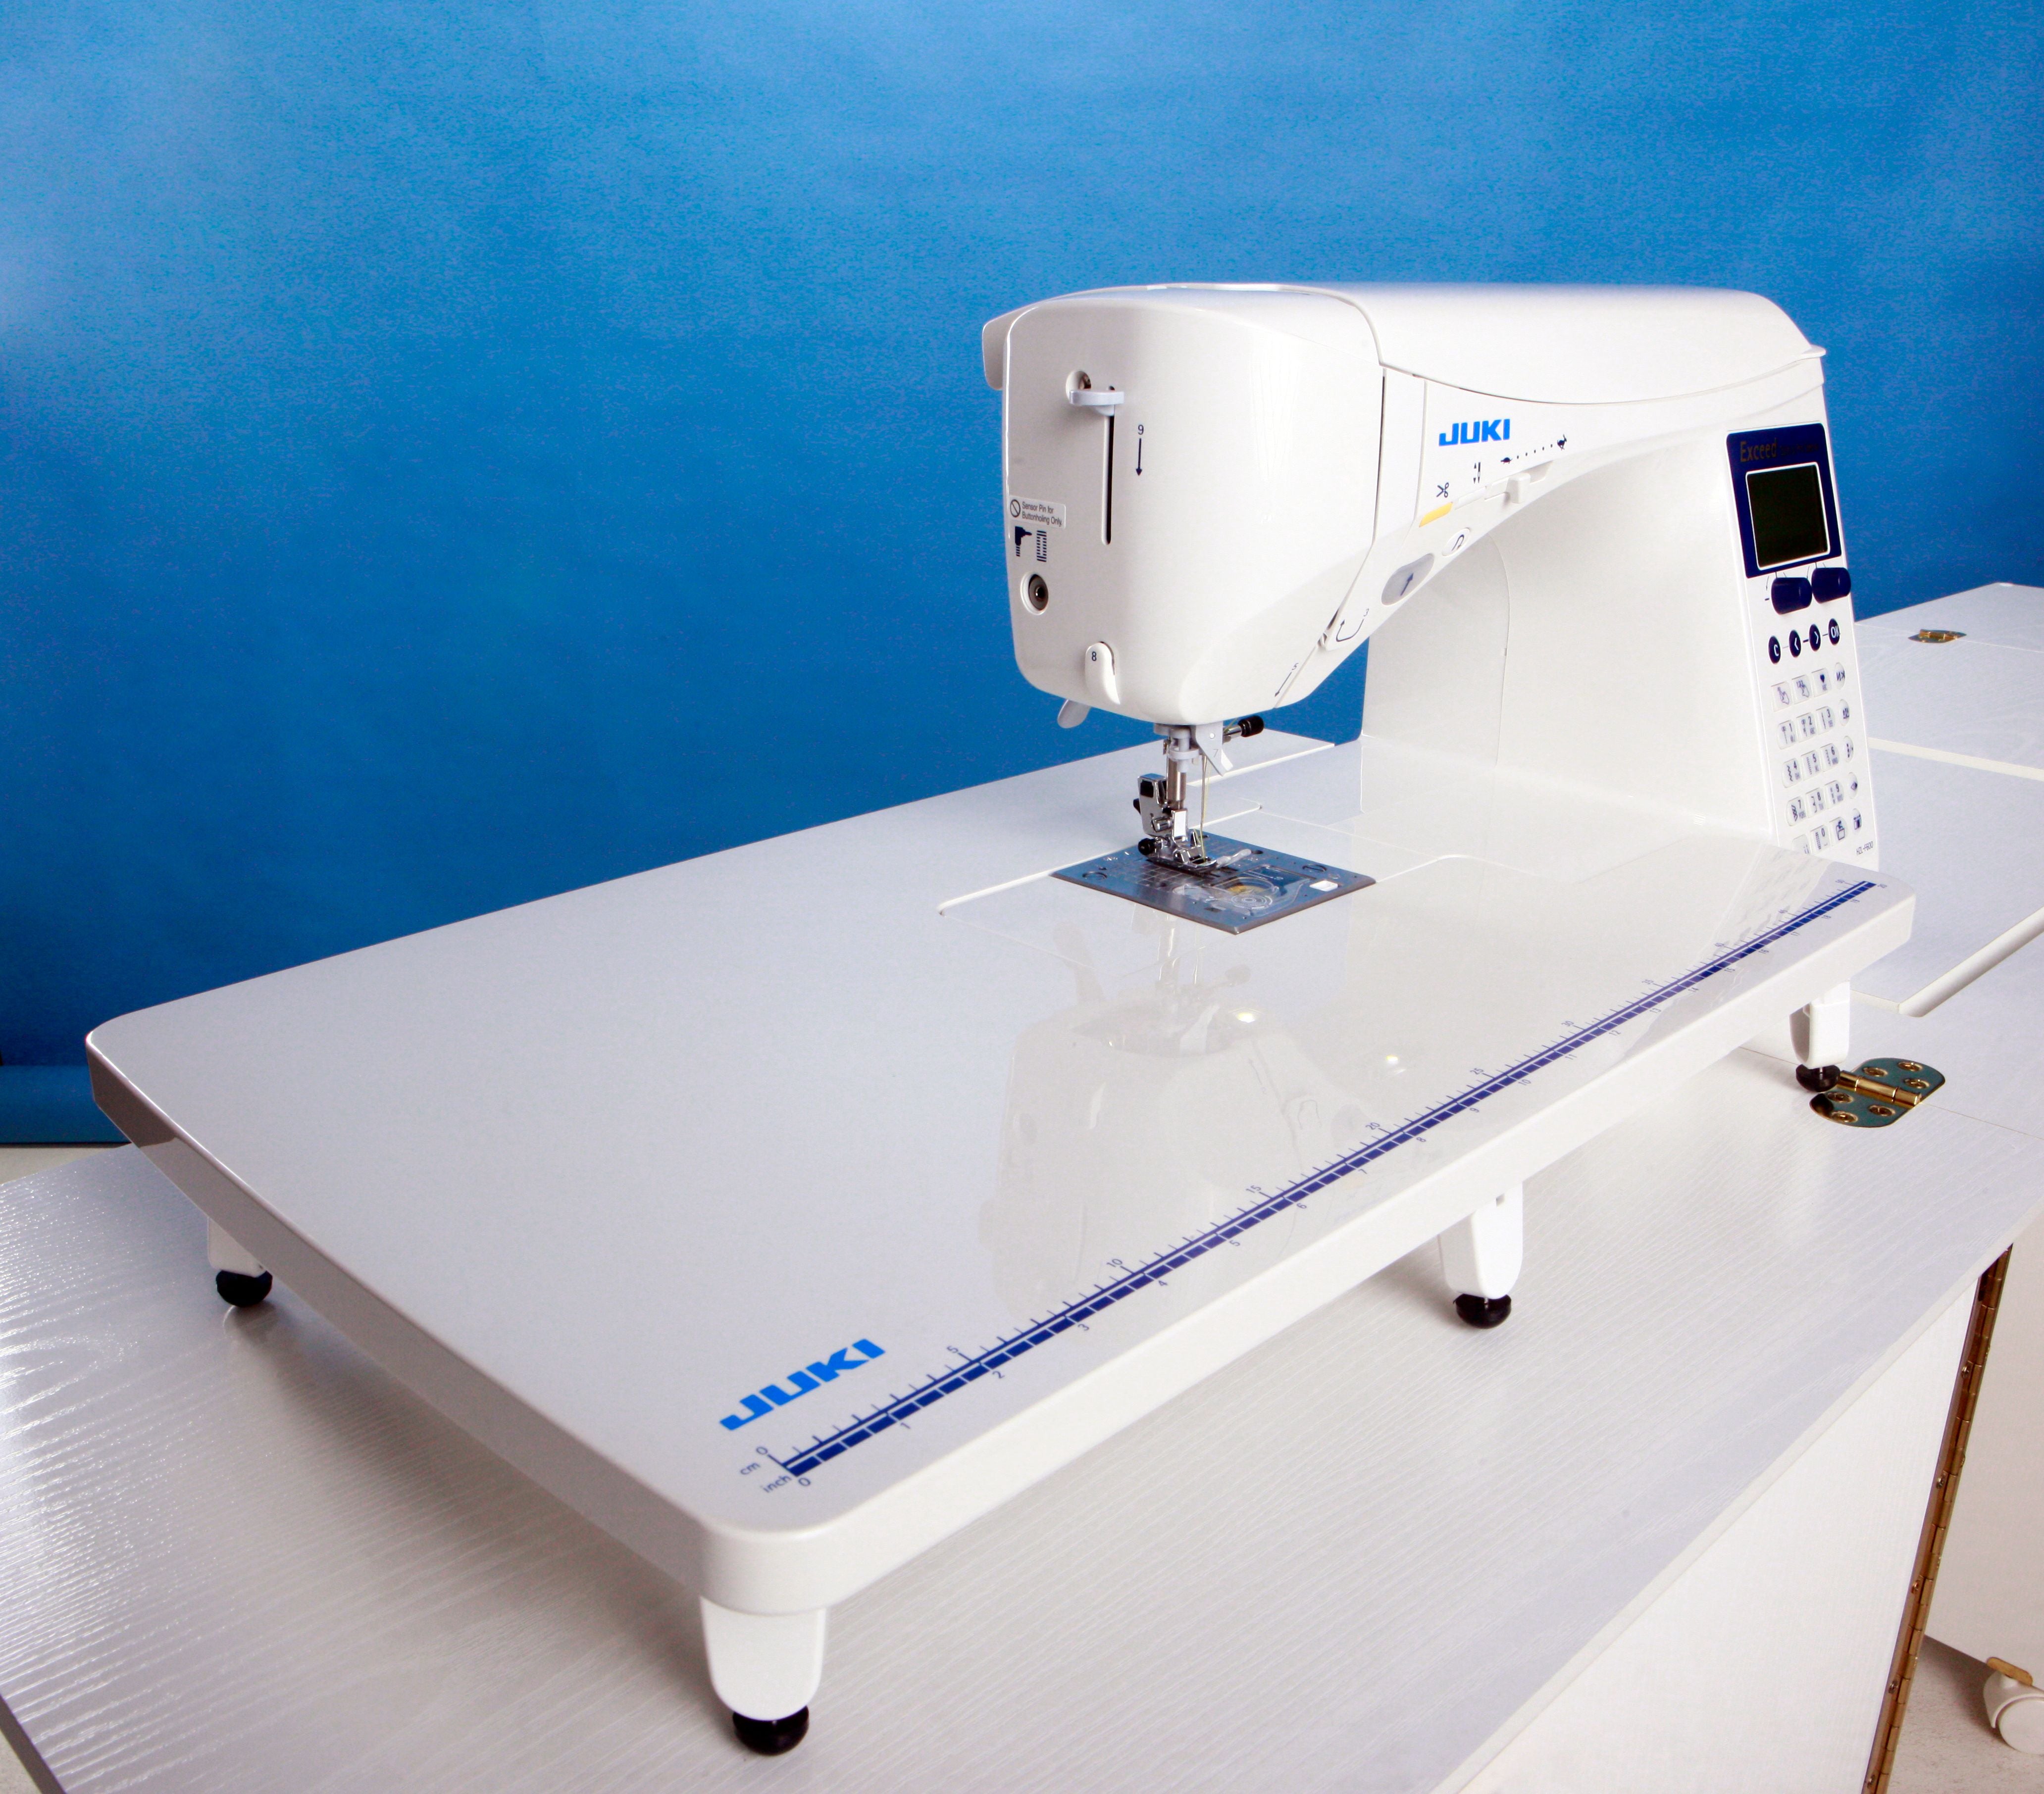 Juki HZL-F600 Quilting & Sewing Machine image # 71738